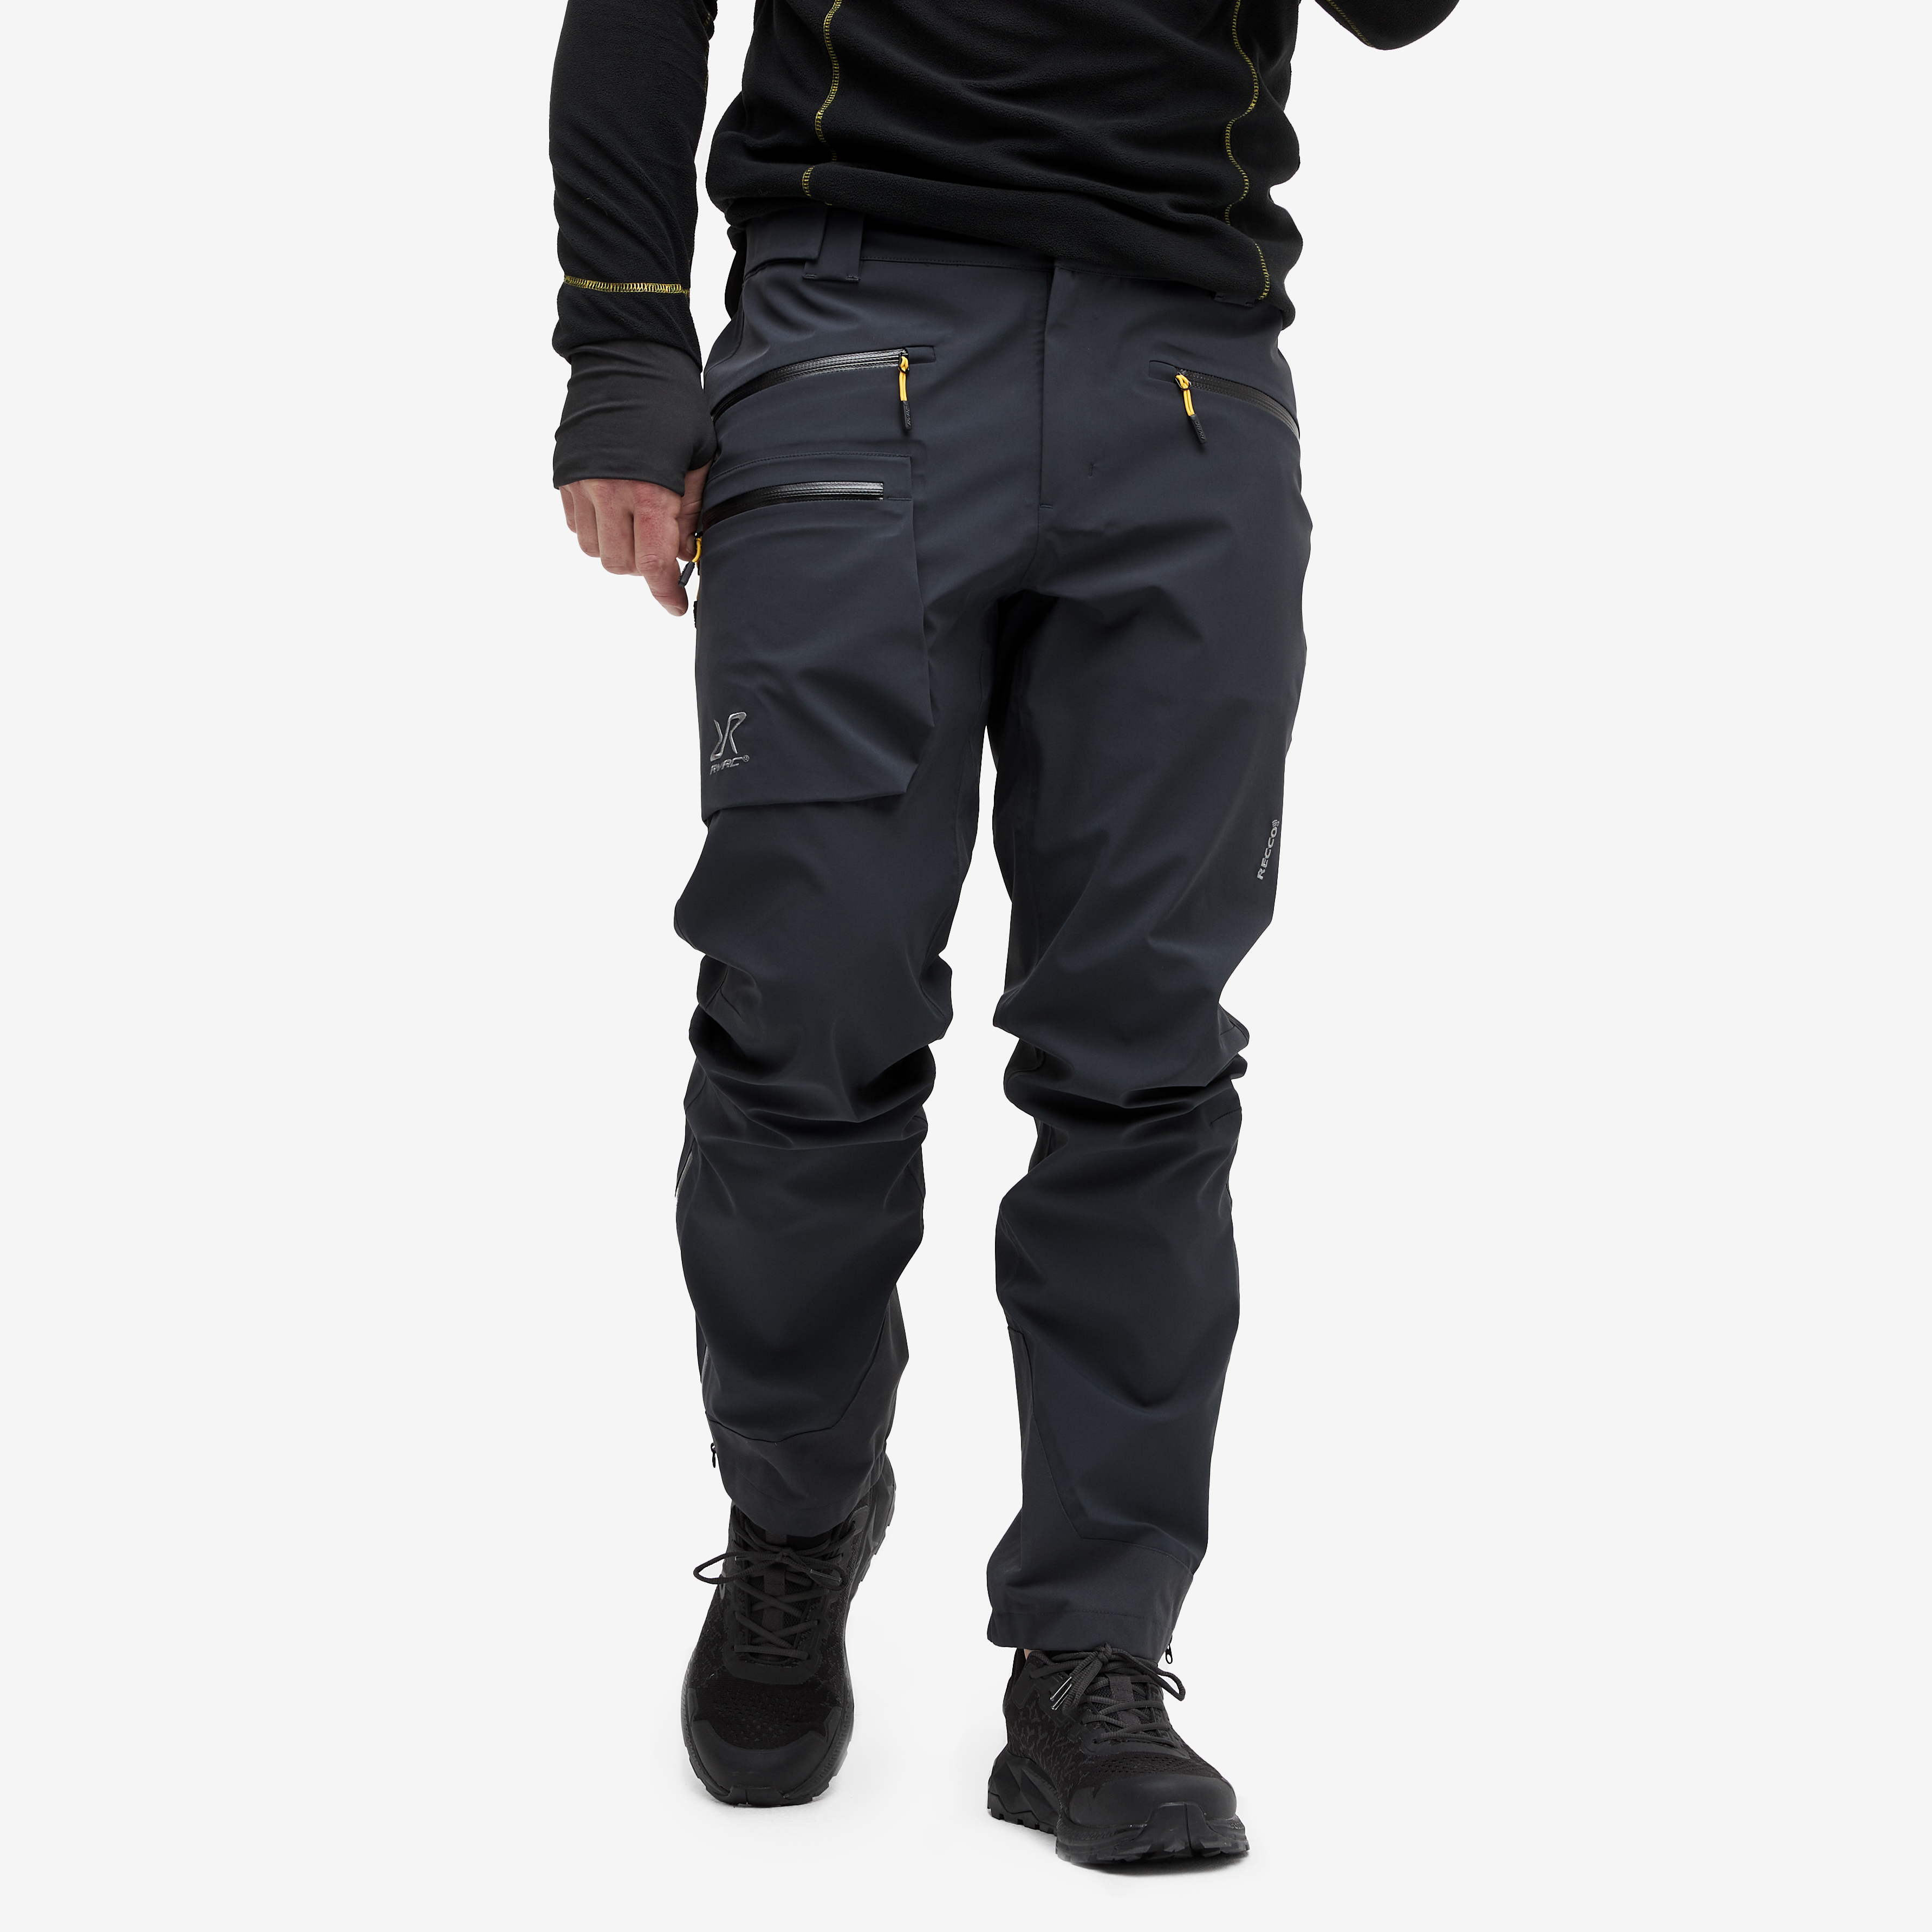 Aphex Pro Pants Charcoal Black Uomo